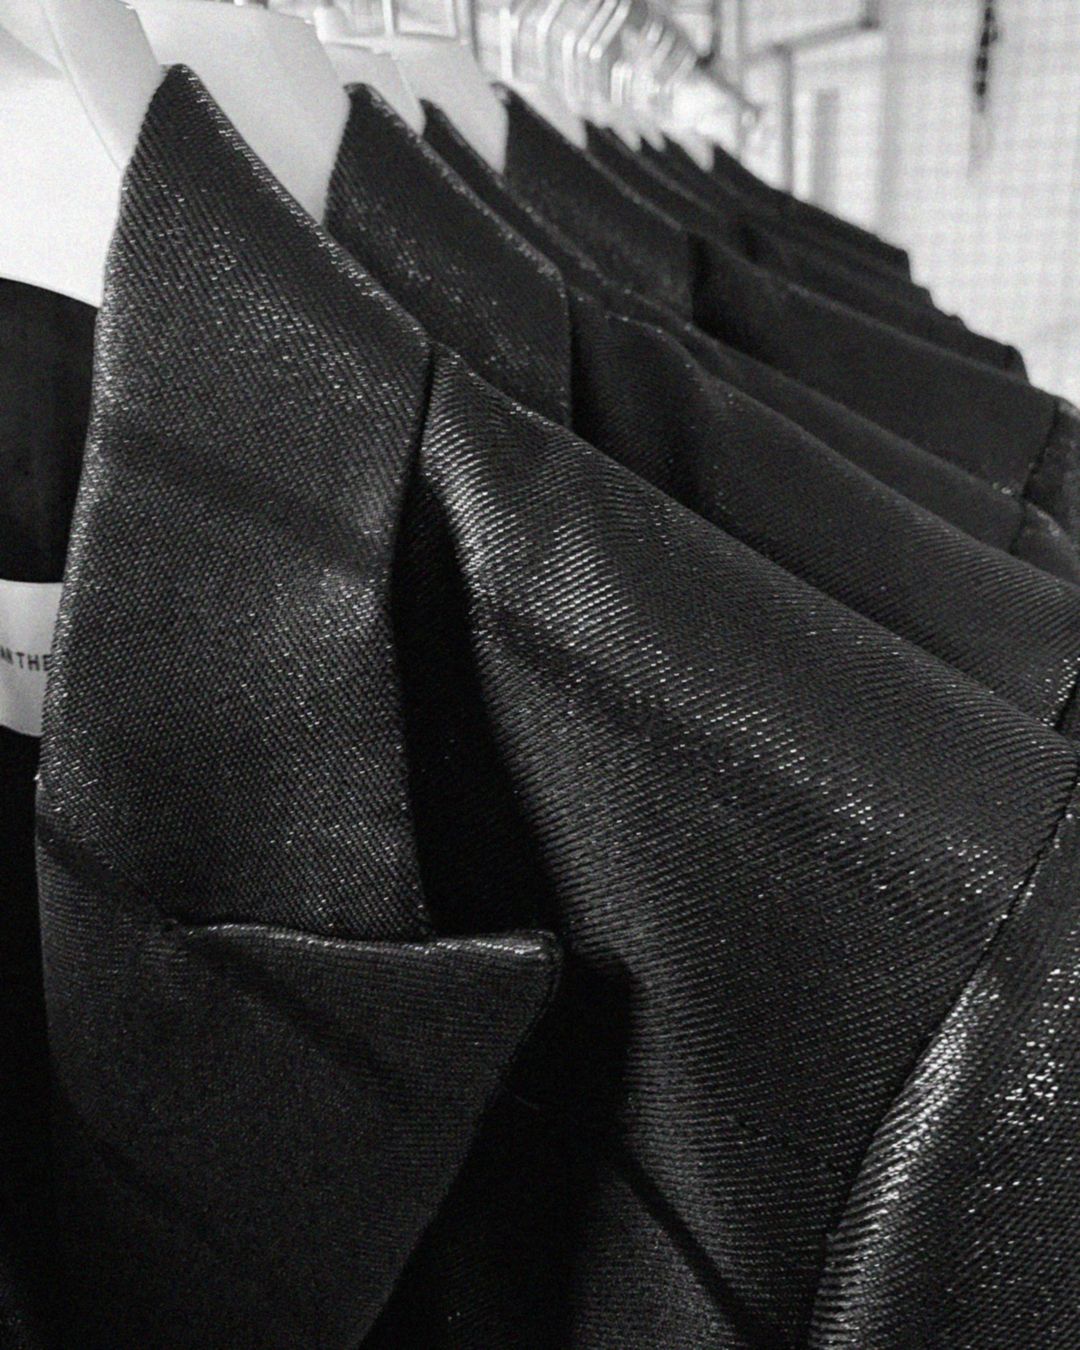 Clothing rack with black blazers